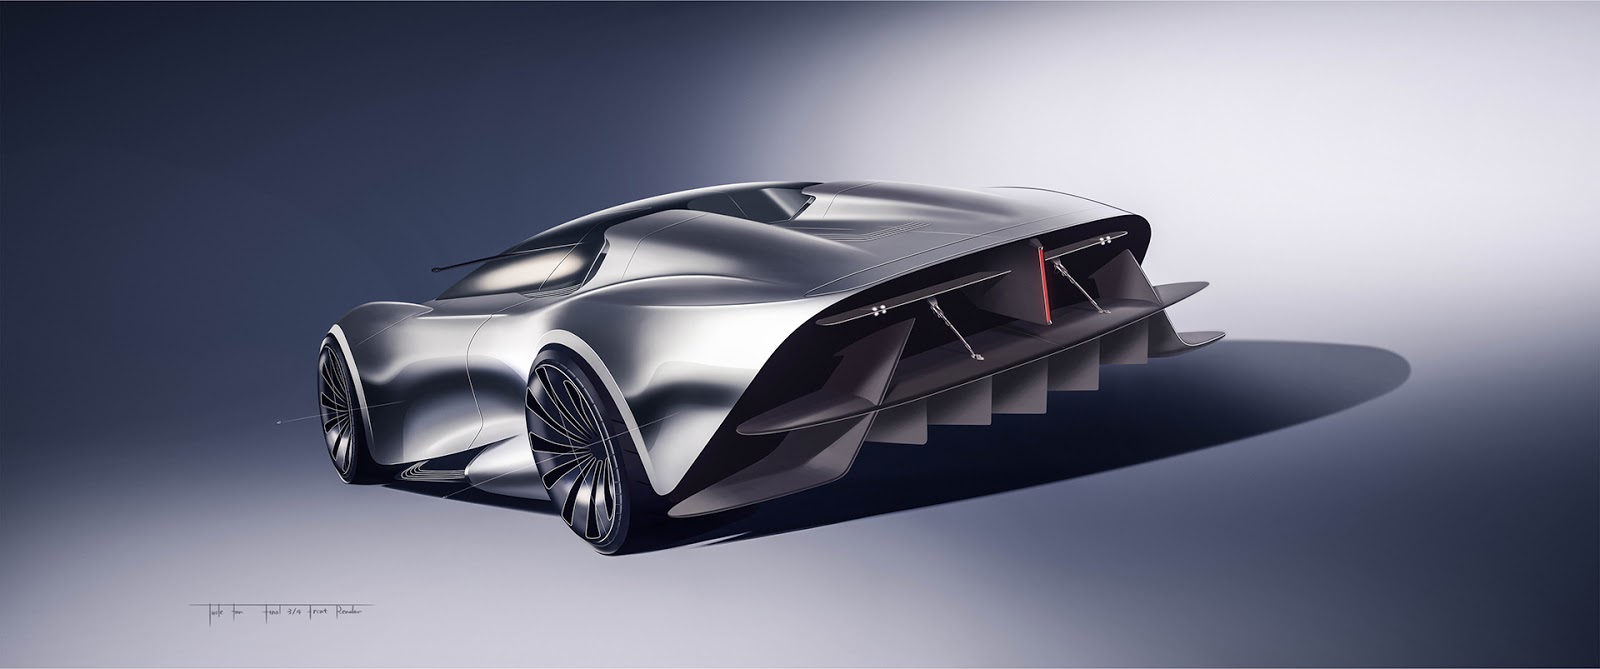 Mercedes-Hybrid-Supercar-Concept-10.jpg